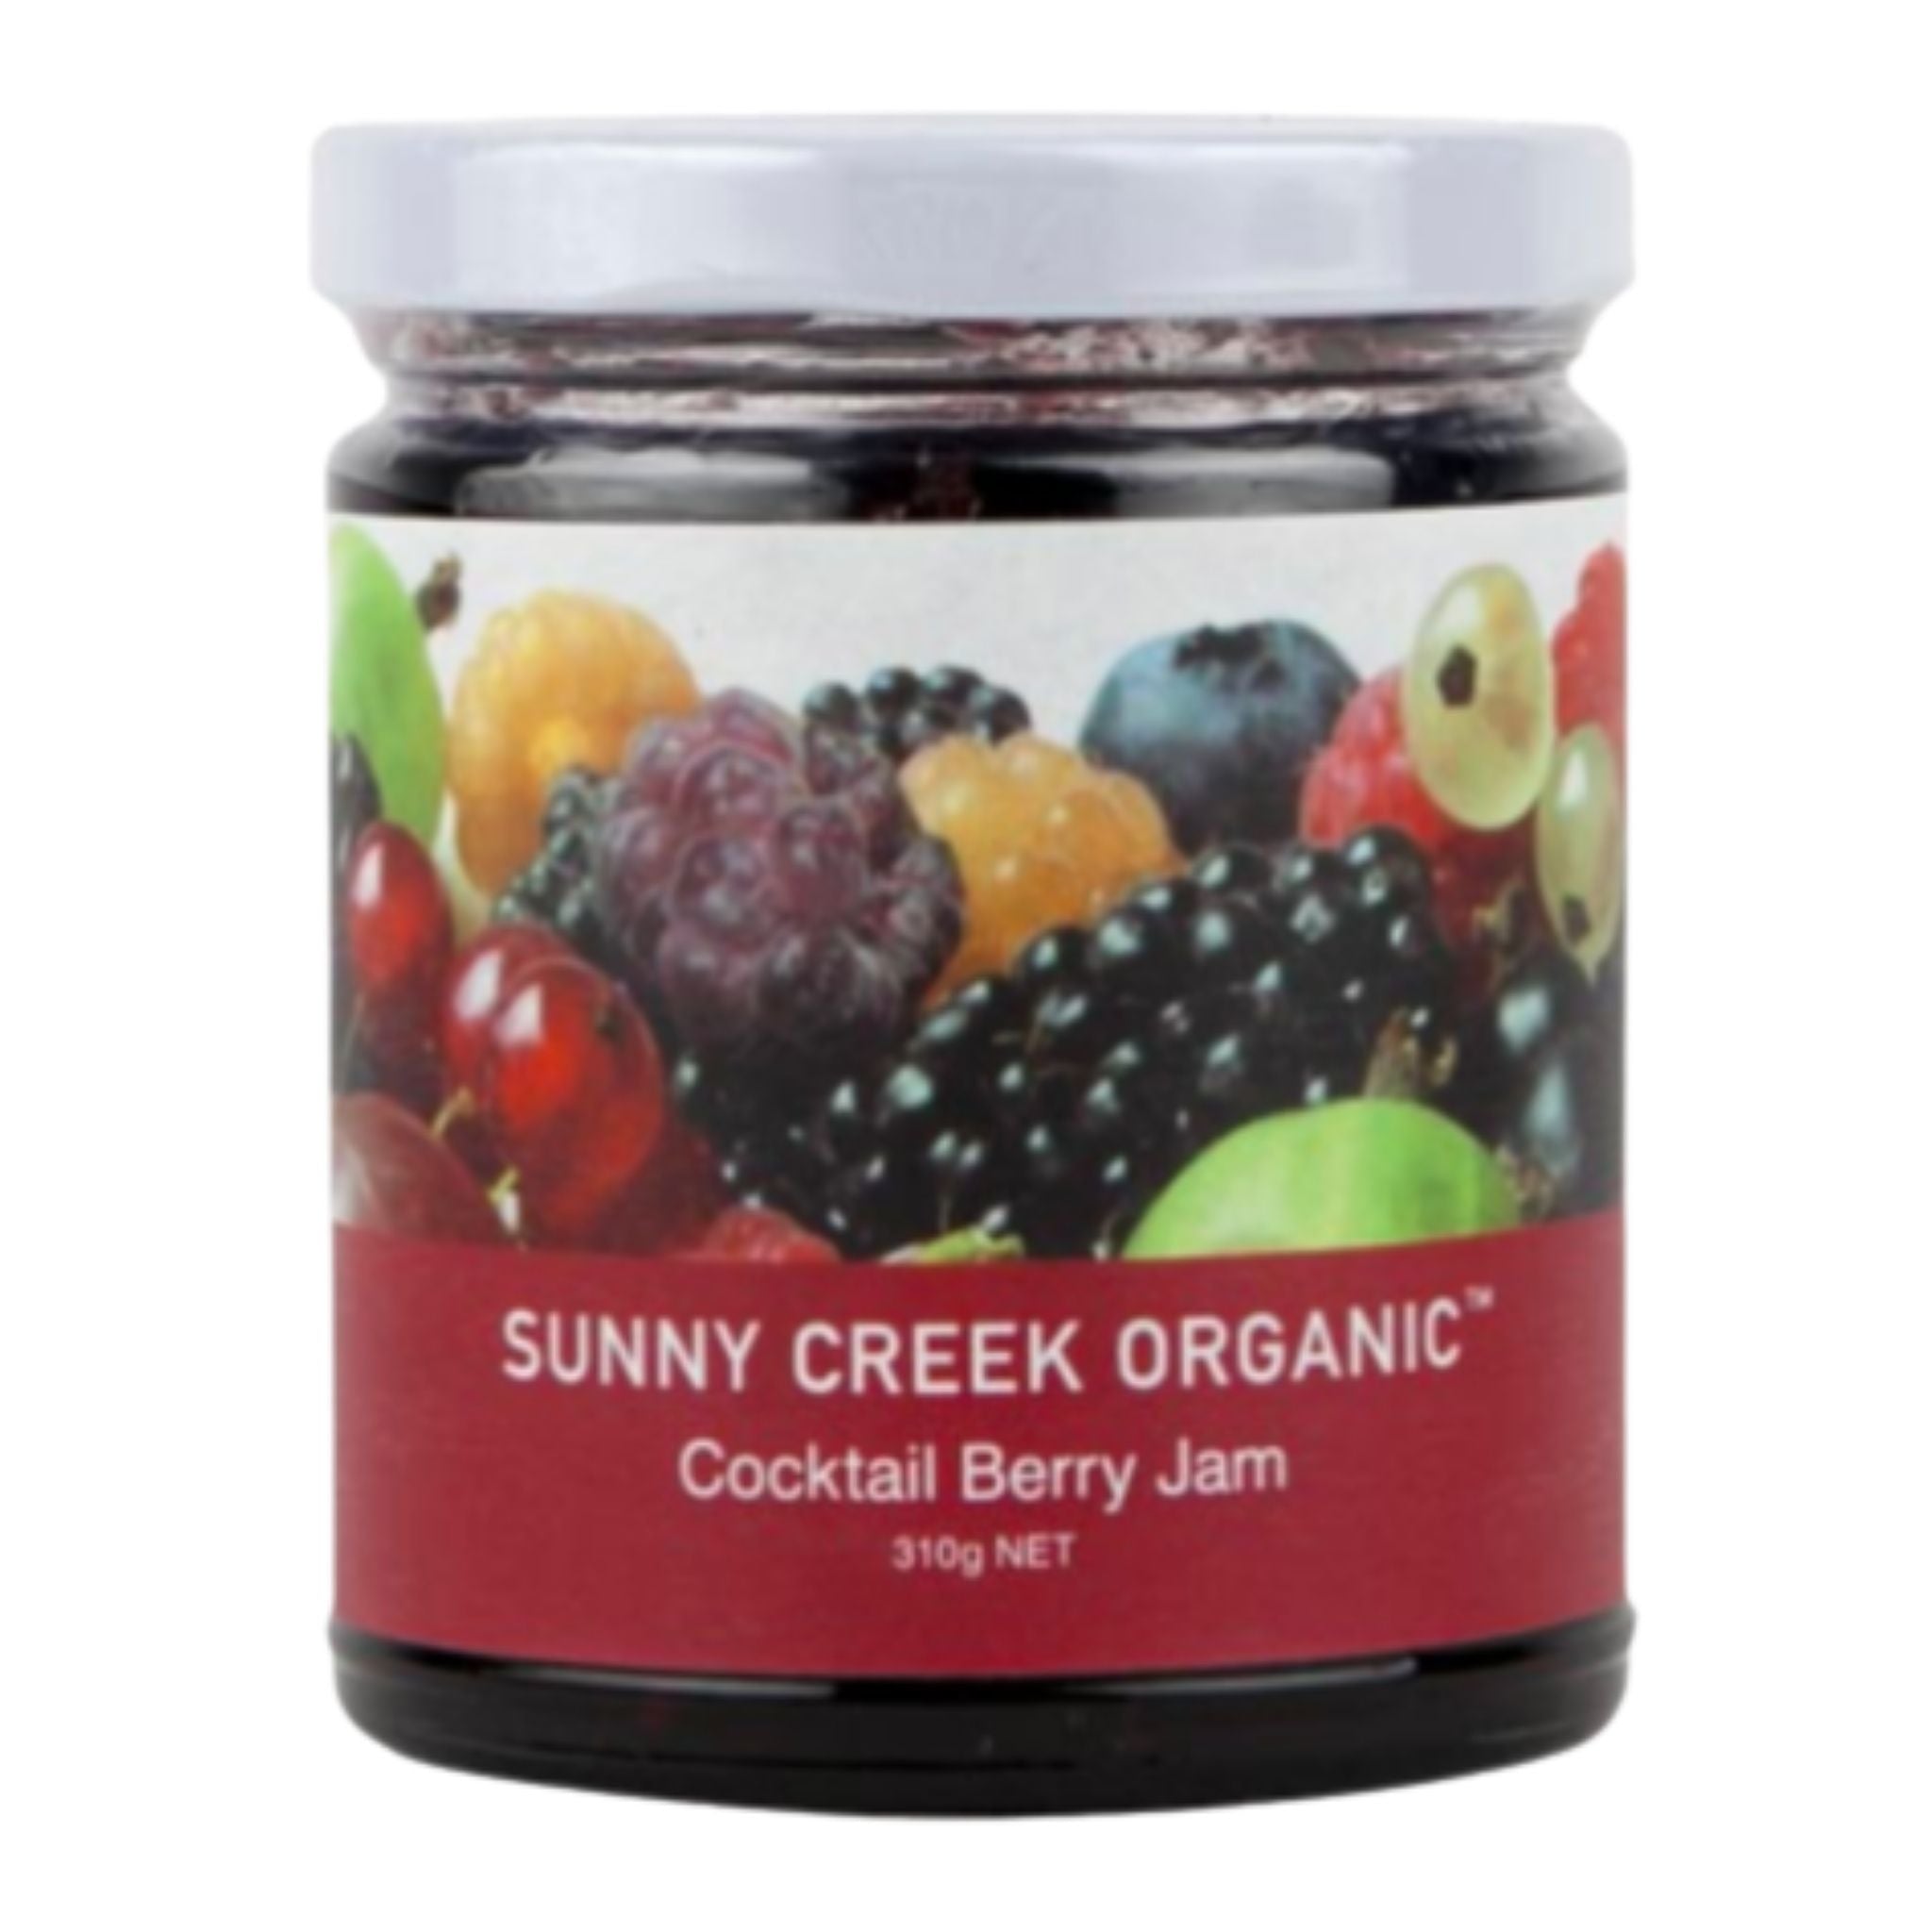 Cocktail Berry Jam (Organic) - Sunny Creek Organic. 310gr